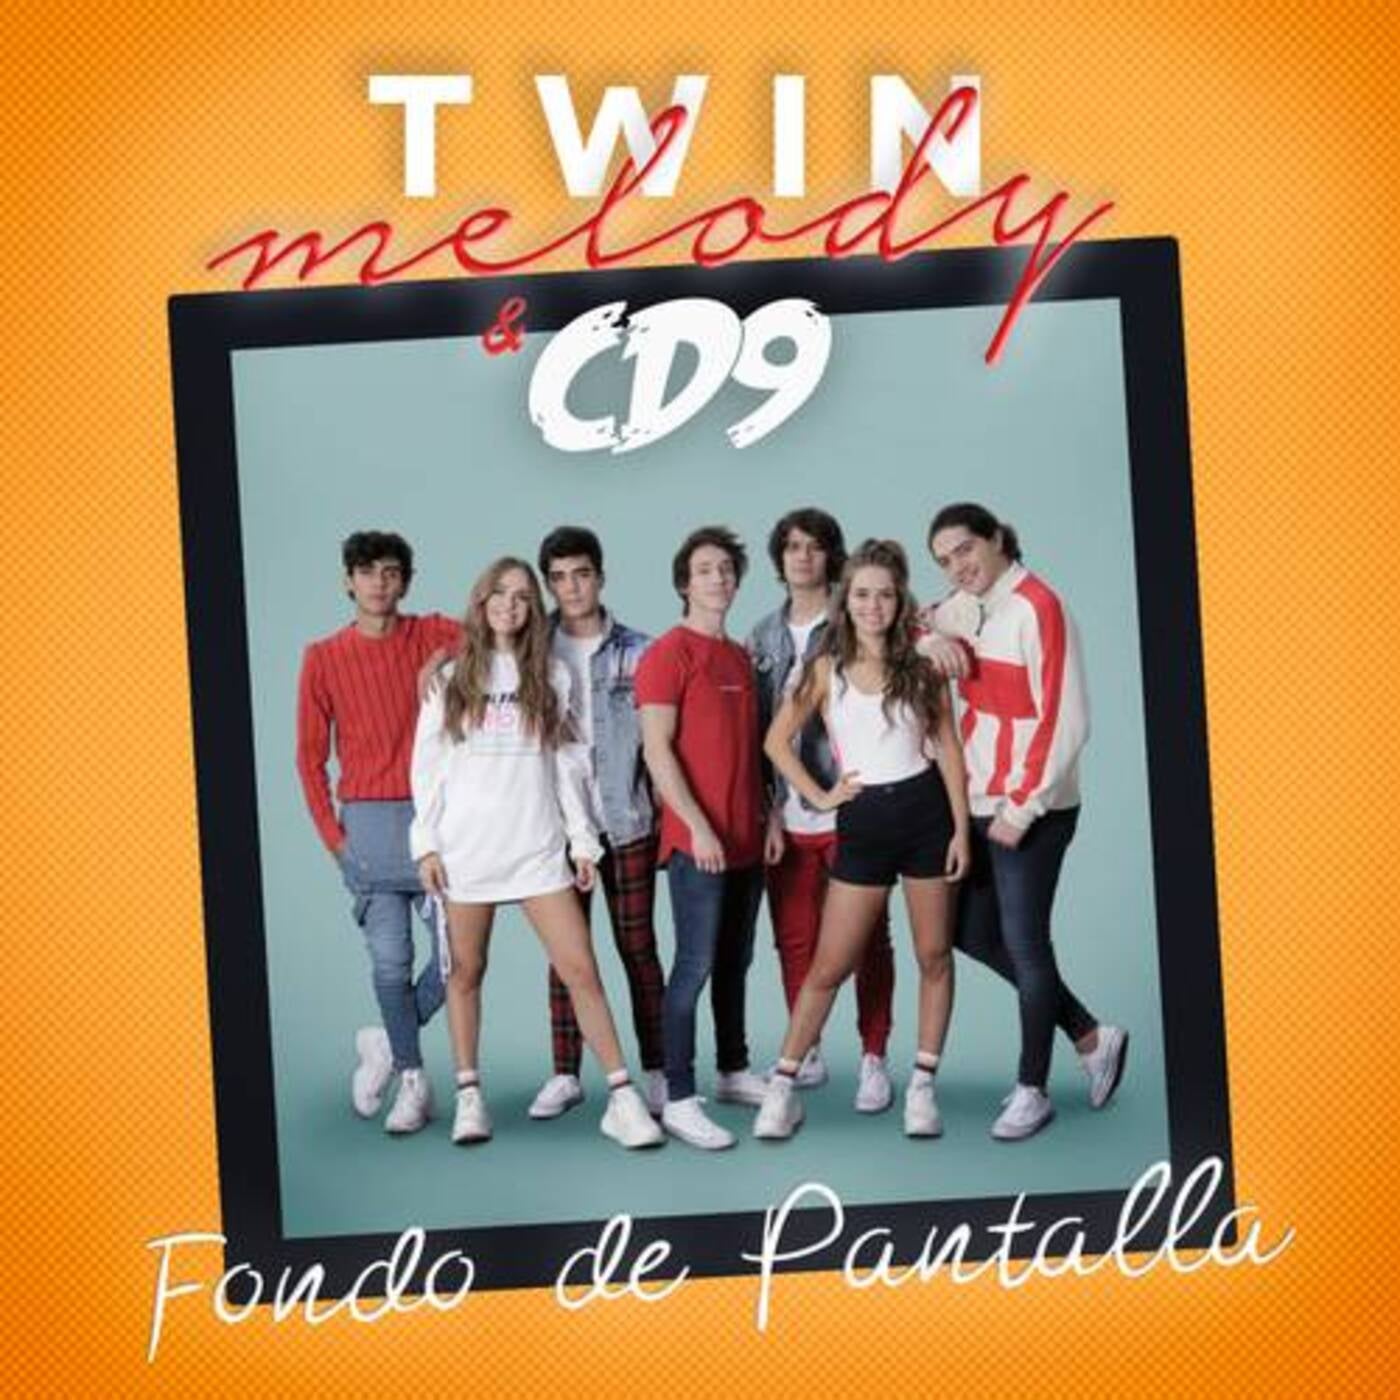 Fondo de Pantalla by CD9 and Twin Melody on Beatsource